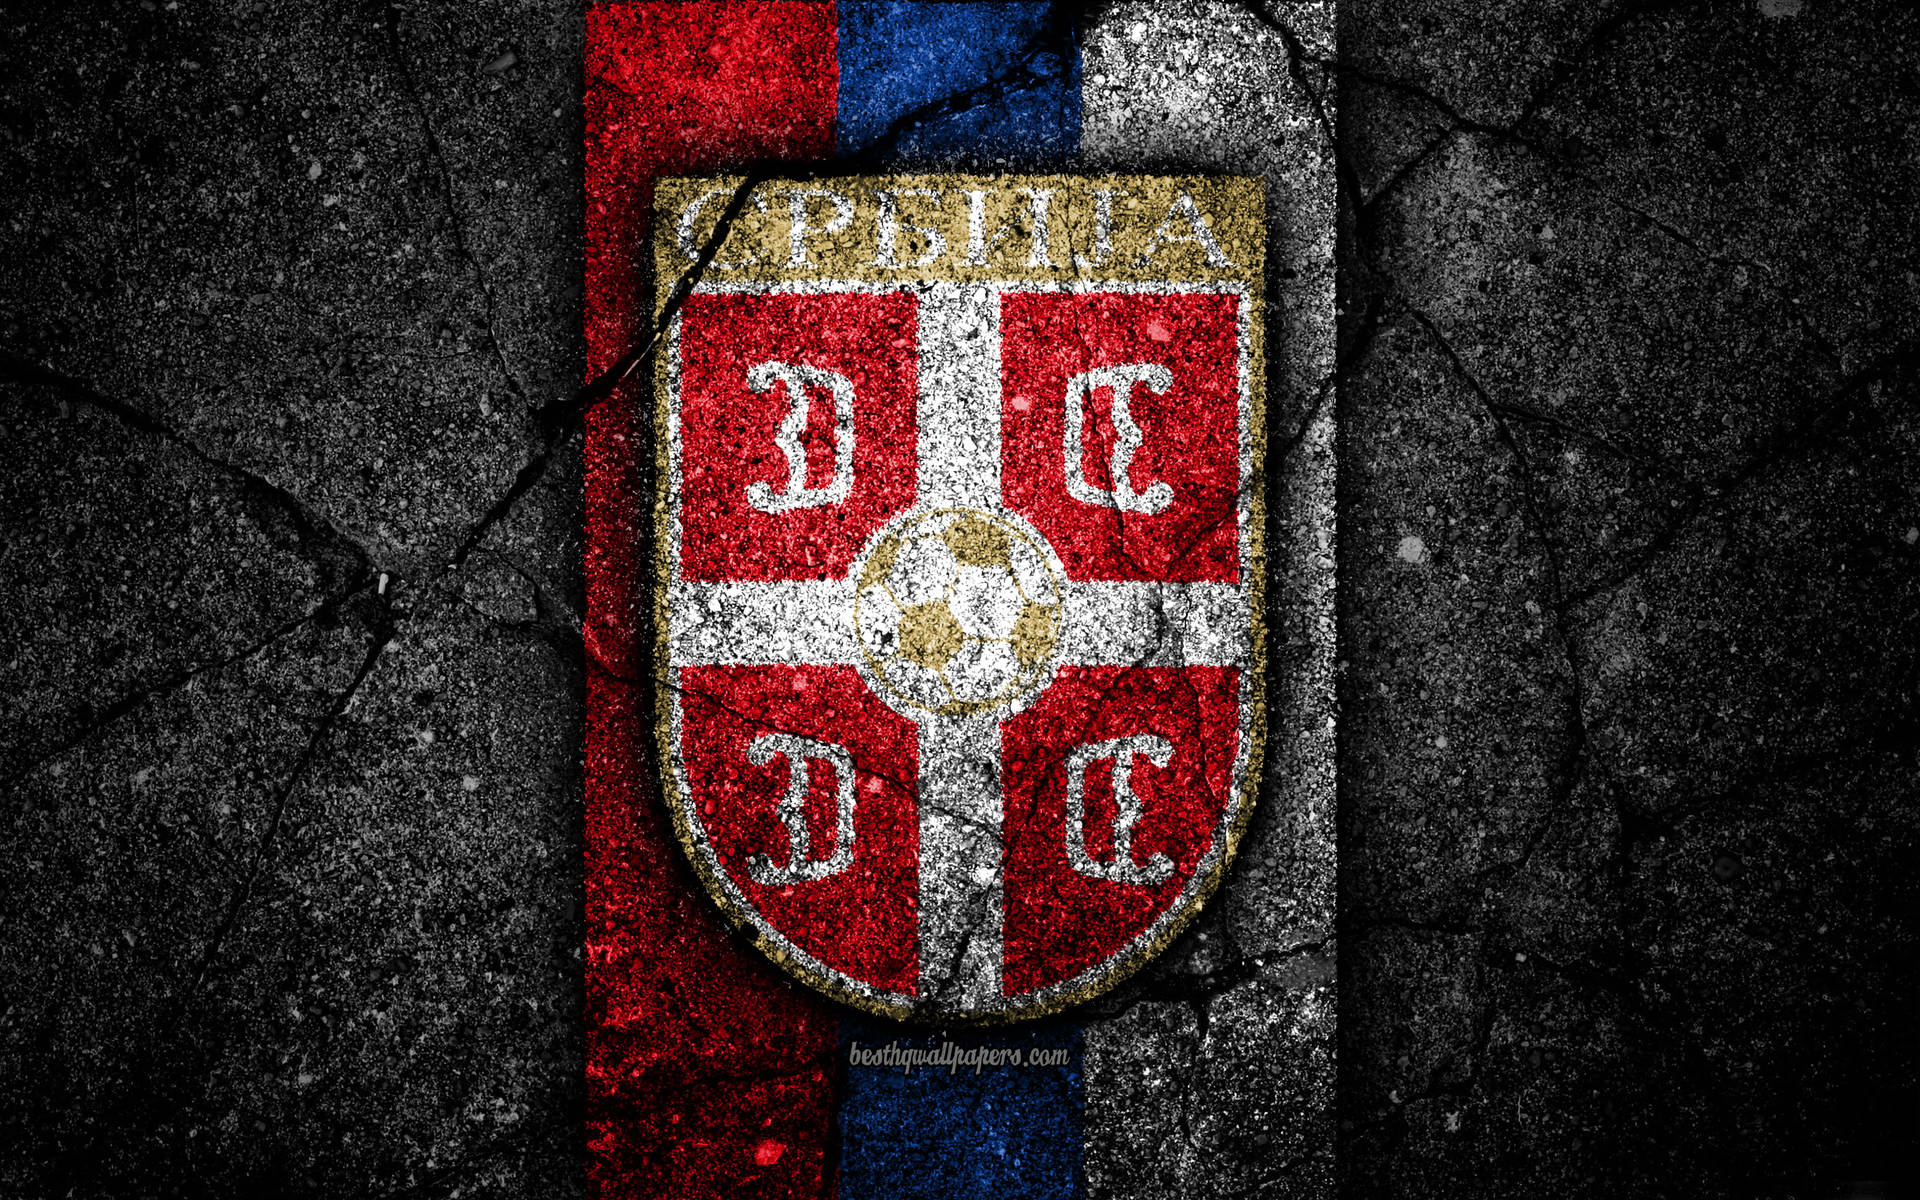 Serbia National Football Team Cracked Stone